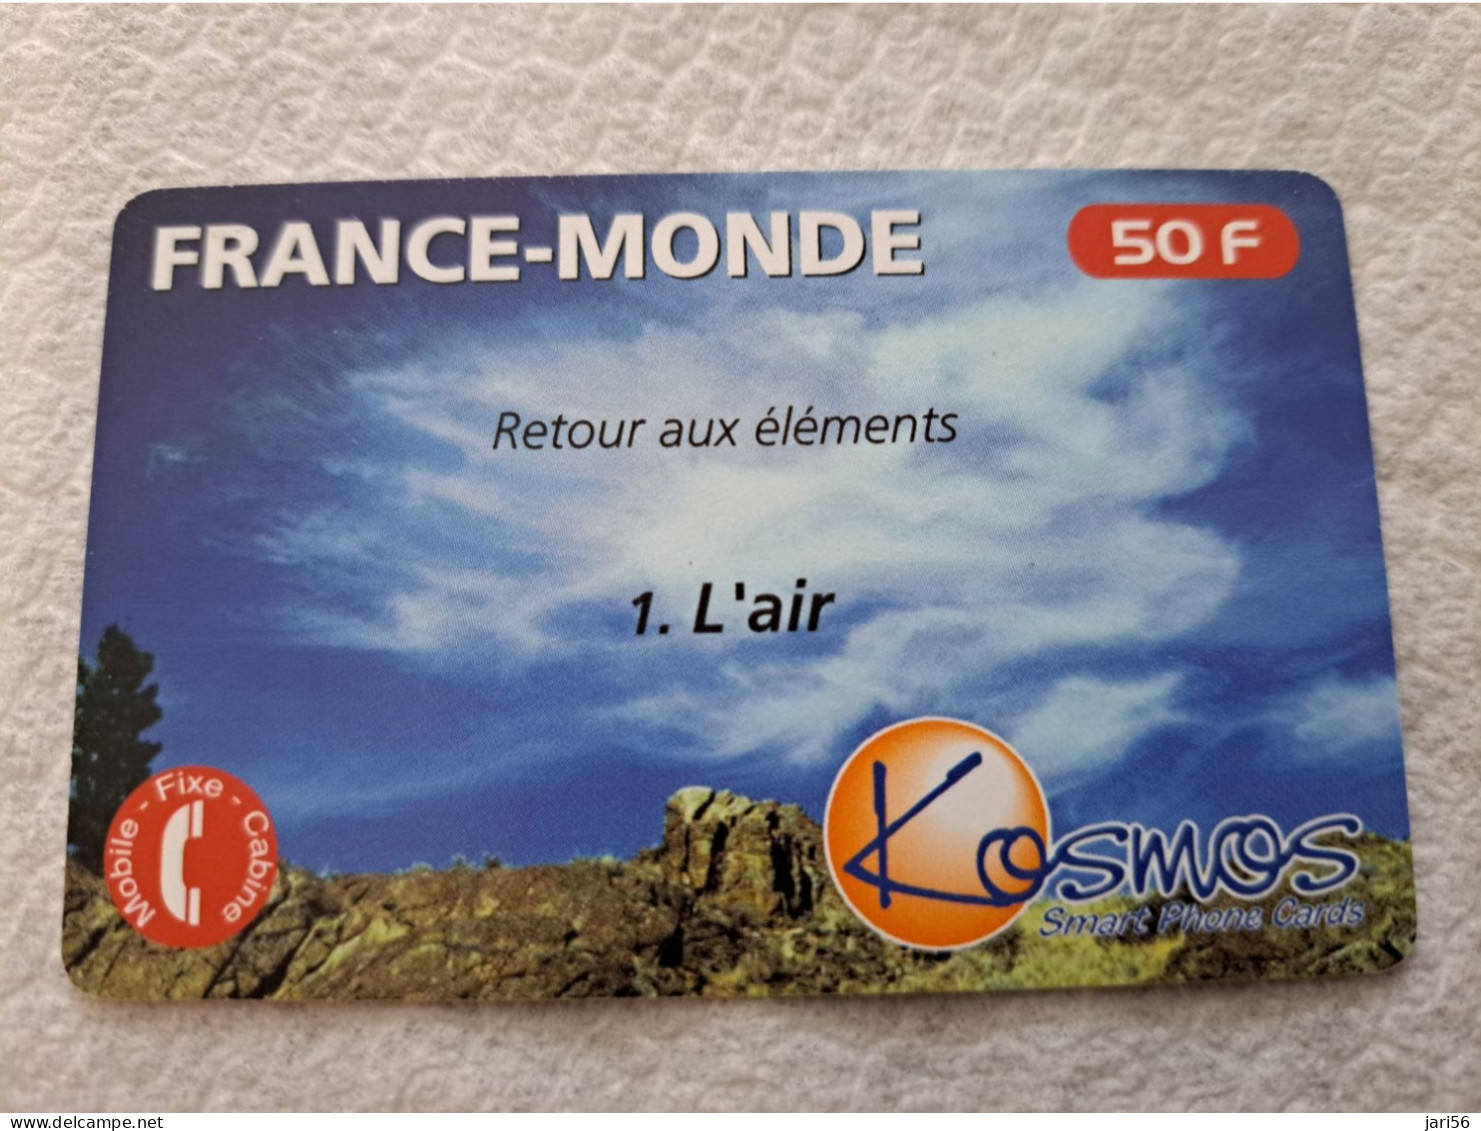 FRANCE/FRANKRIJK  50F// KOSMOS SMART/ FRANCE MONDE  /L"AIR  /   PREPAID  / USED   ** 14540** - Mobicartes (GSM/SIM)